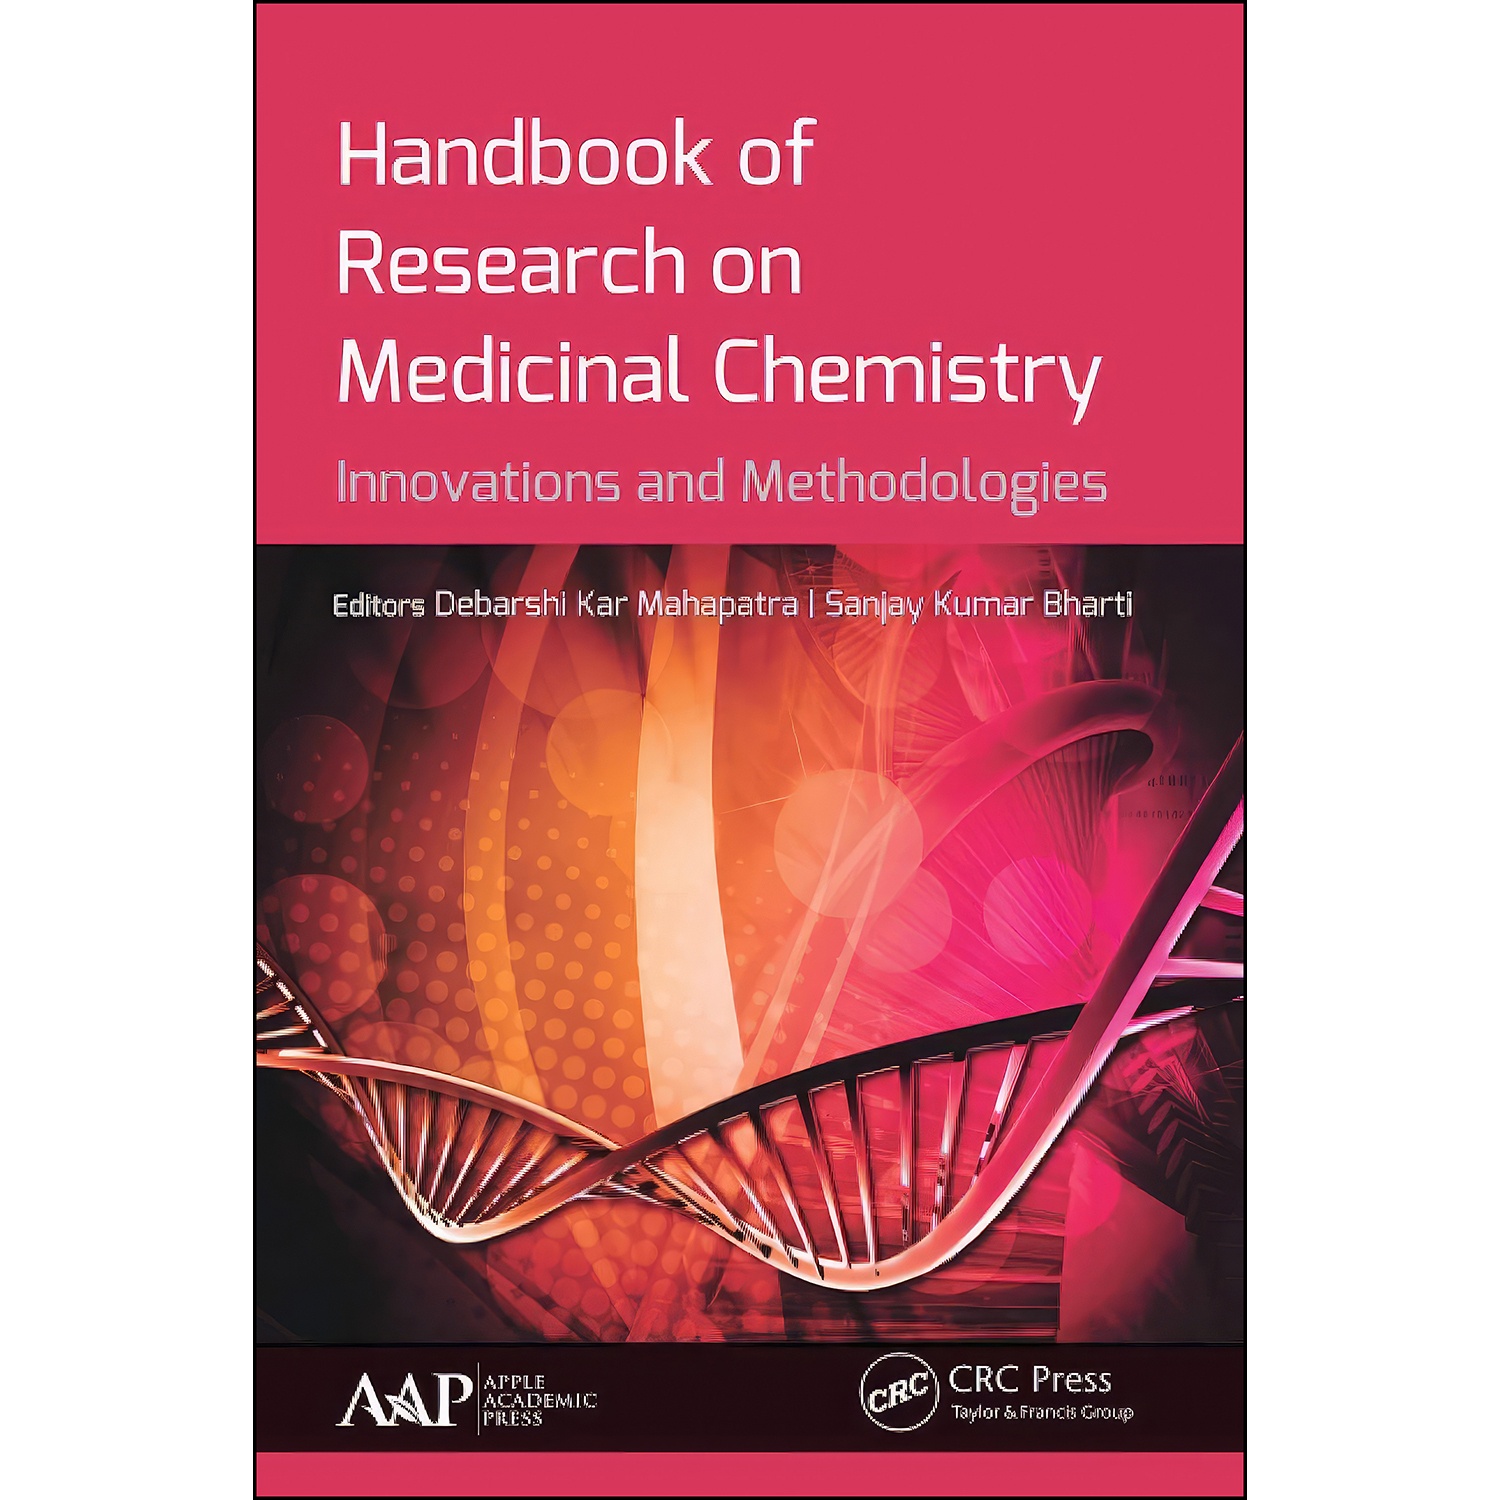 کتاب Handbook of Research on Medicinal Chemistry اثر جمعي از نويسندگان انتشارات تازه ها